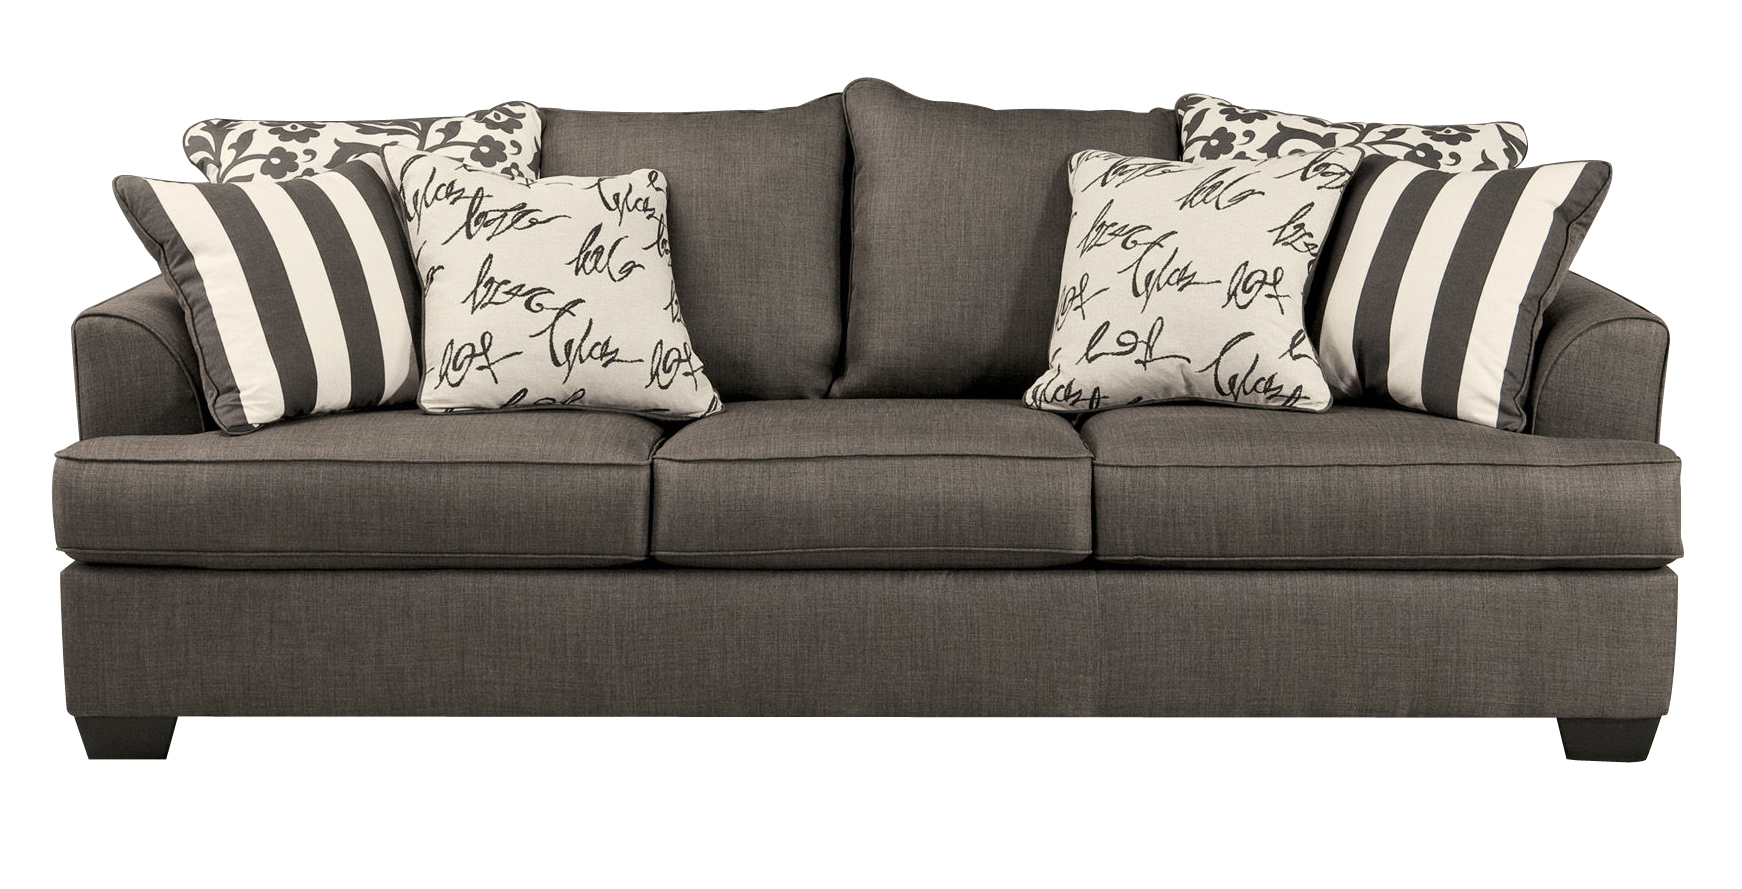 Ashley Furniture Levon Charcoal Sofa The Classy Home,Pet Tortoise House